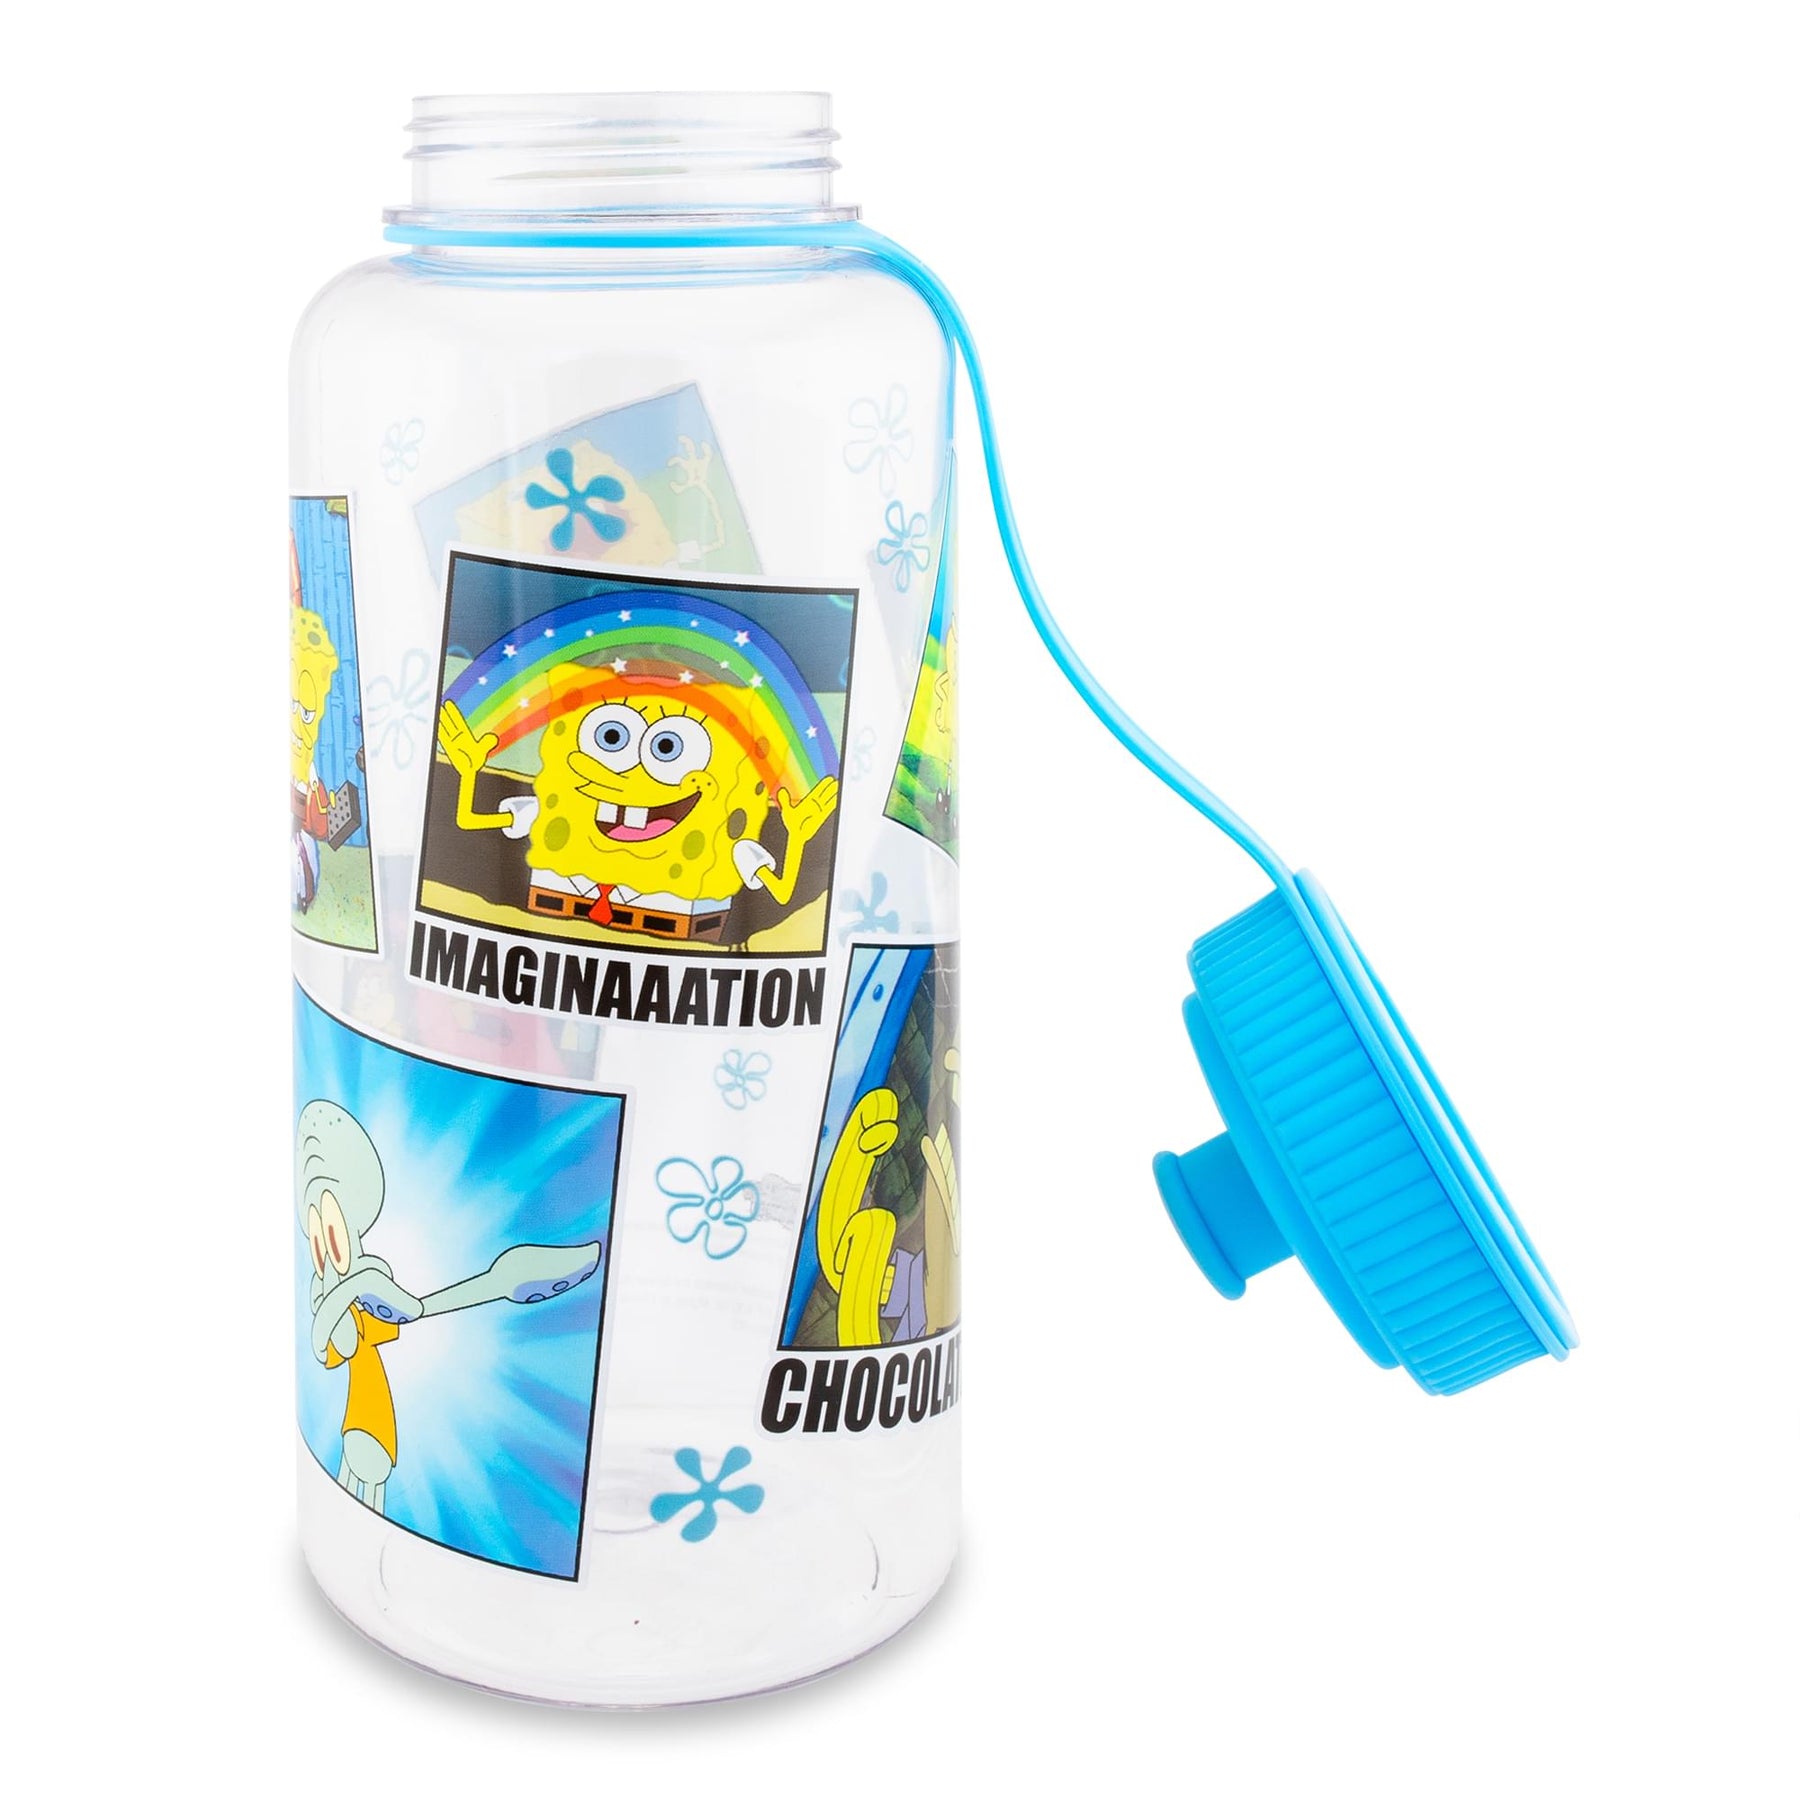 SpongeBob SquarePants Memes 33 oz. Sport Water Bottle